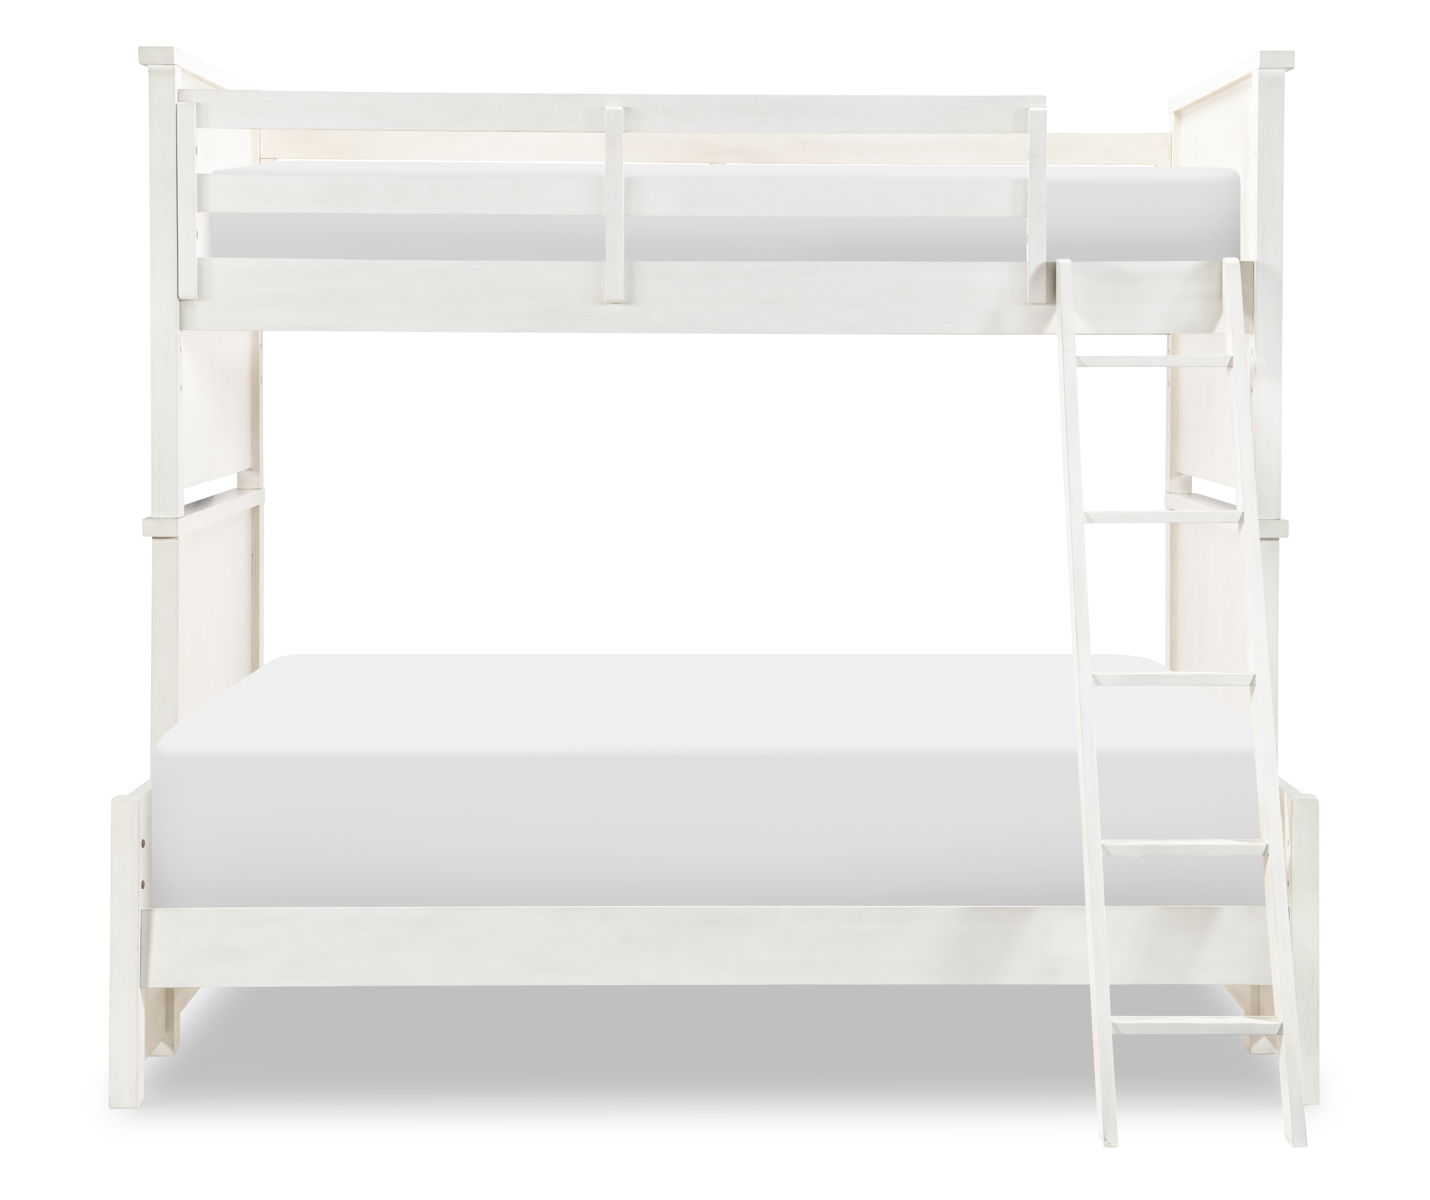 Flatiron - Complete Bed - Over Bunk